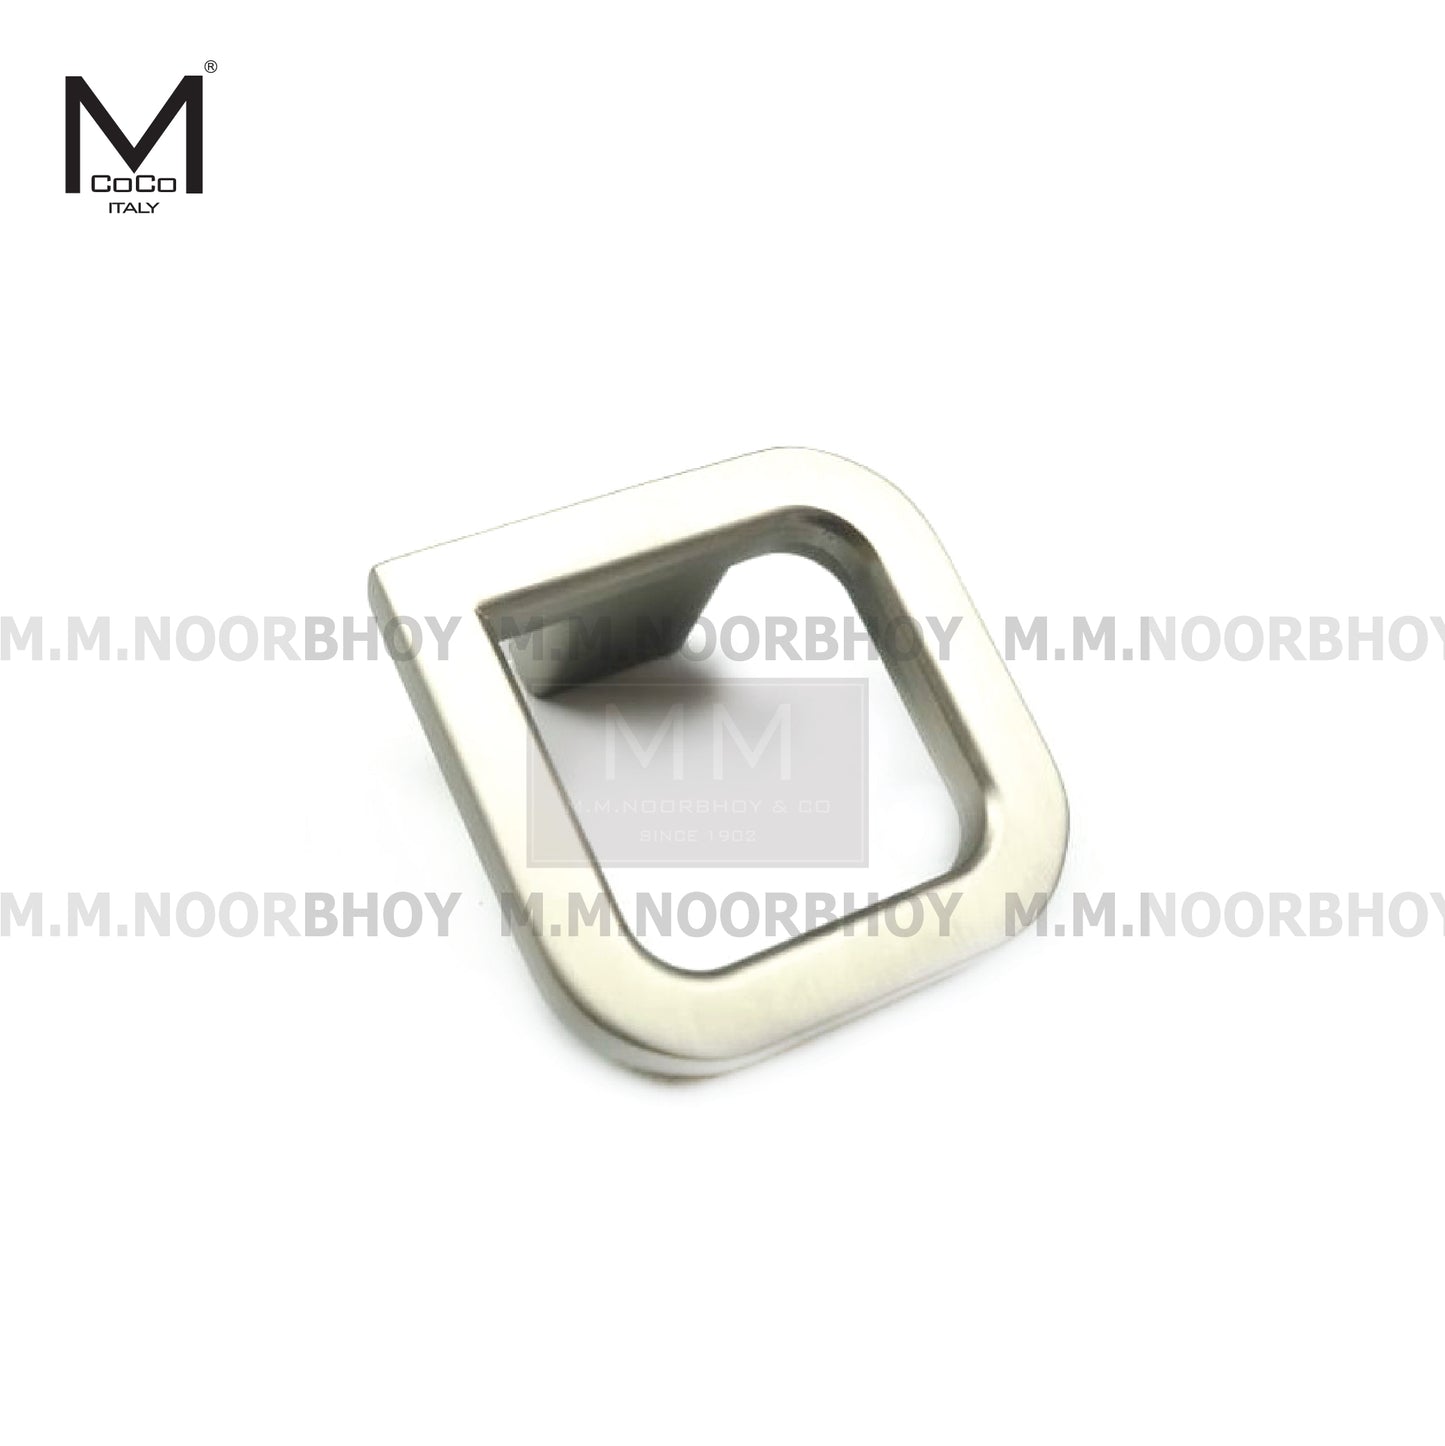 Mcoco Ring Knob Square MBN & MSB Finish - 5814